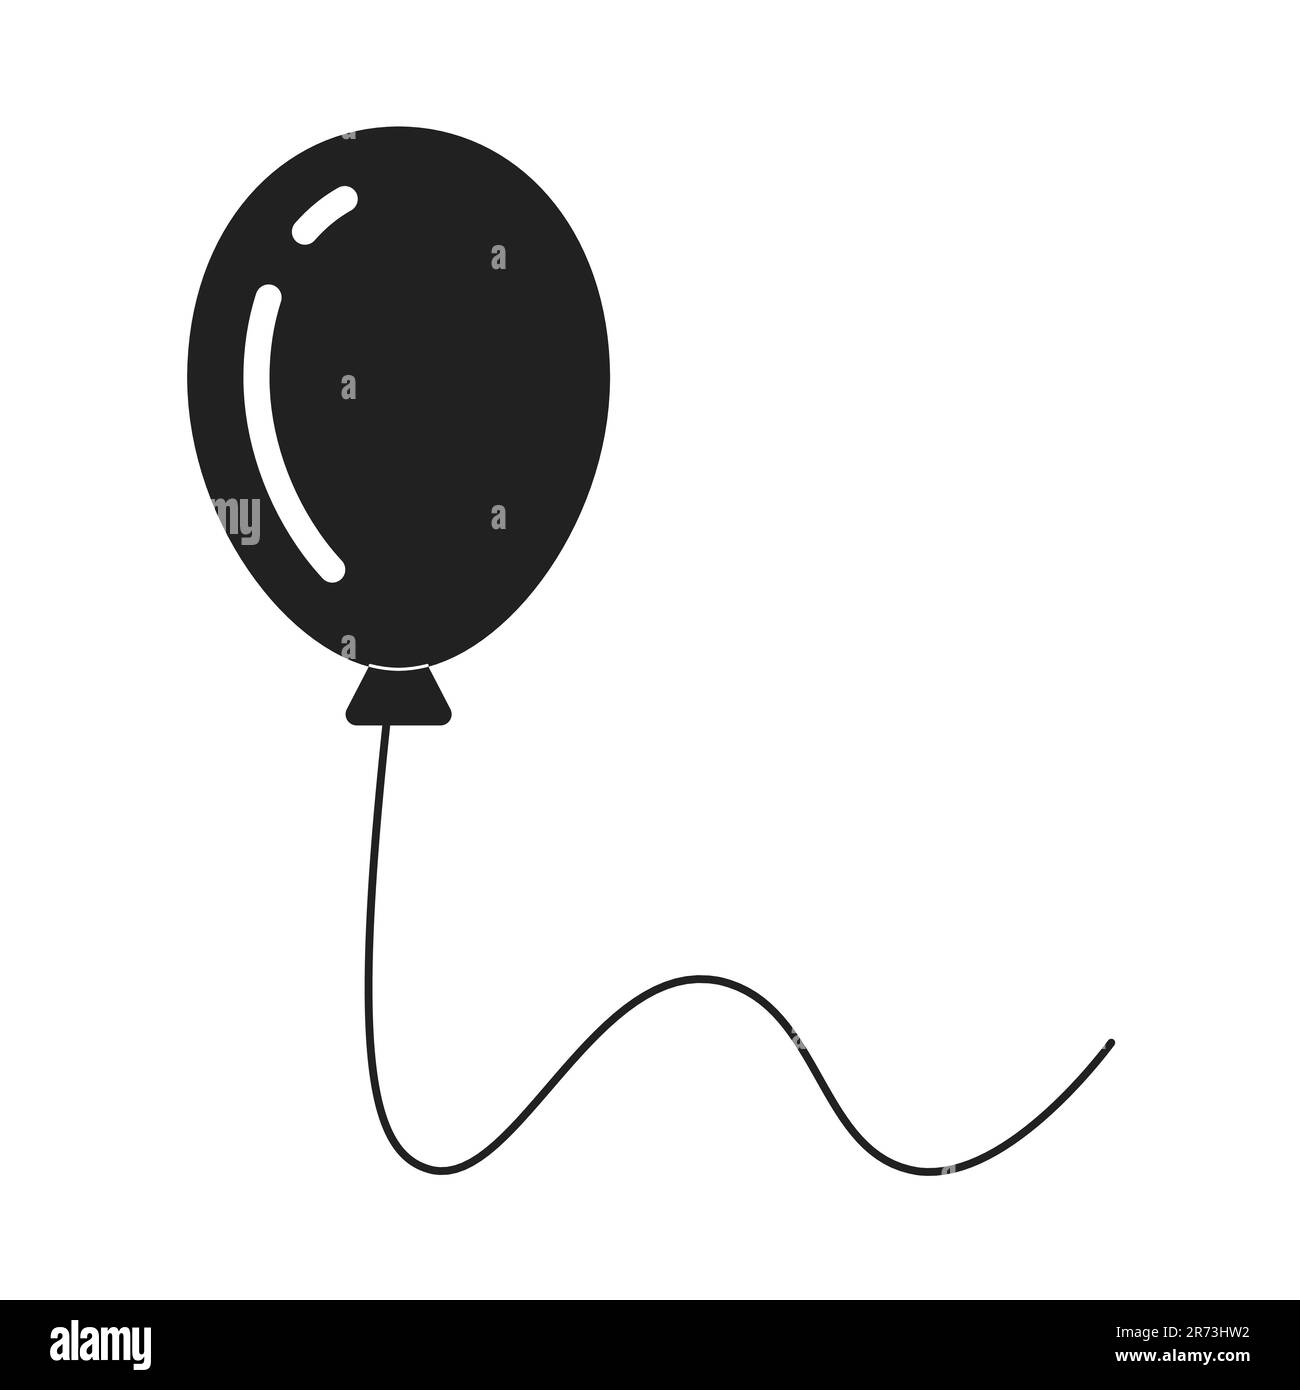 Single balloon Black and White Stock Photos & Images - Alamy